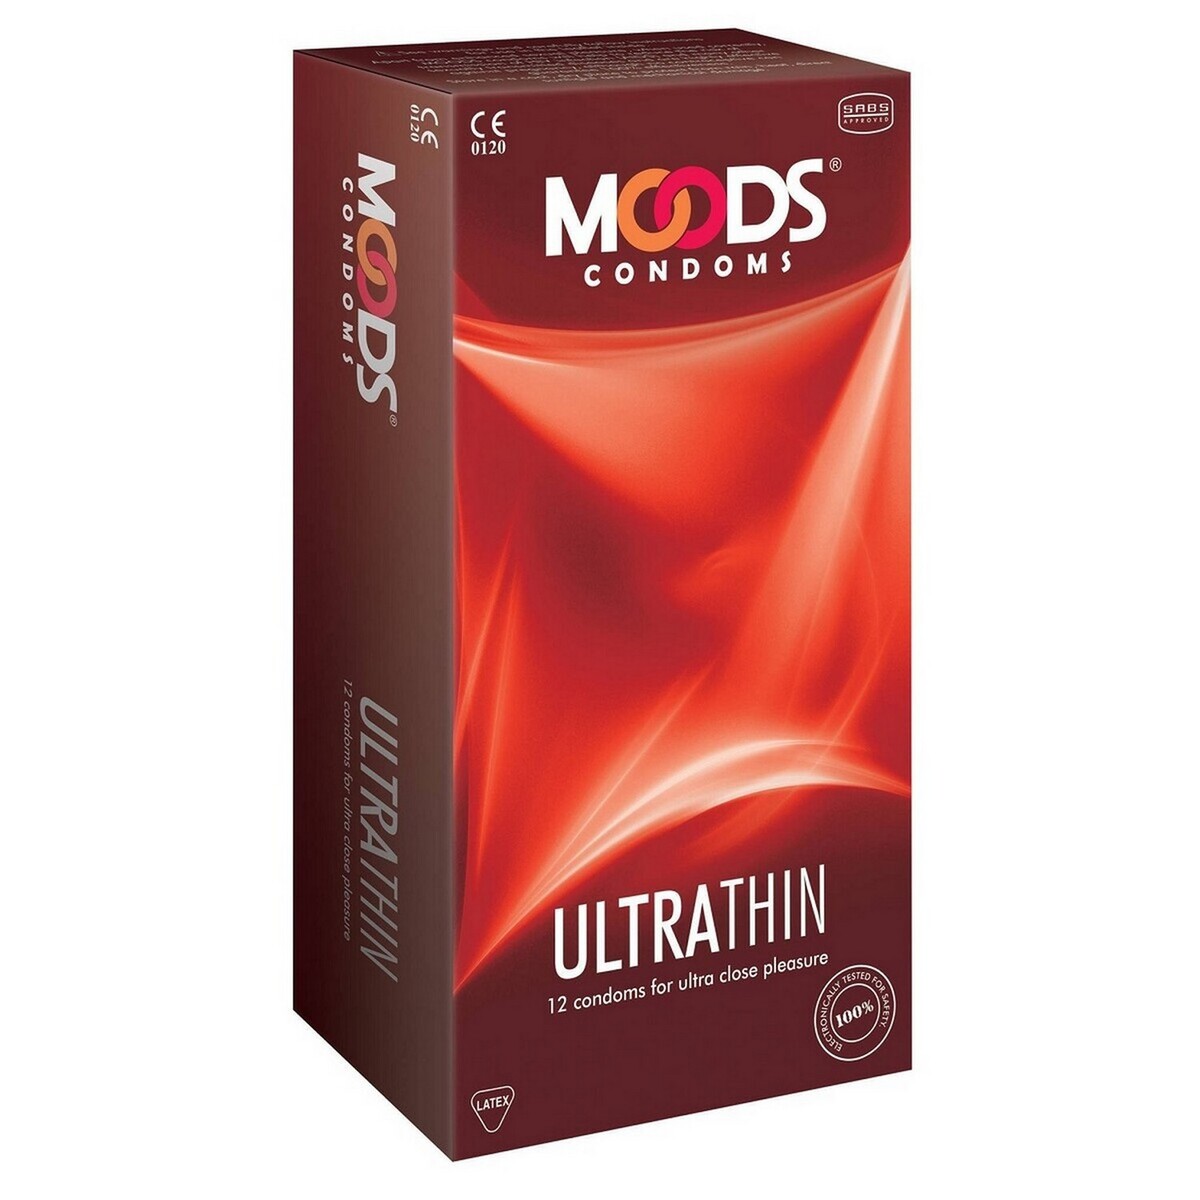 Moods Condom Ultrathin 12's